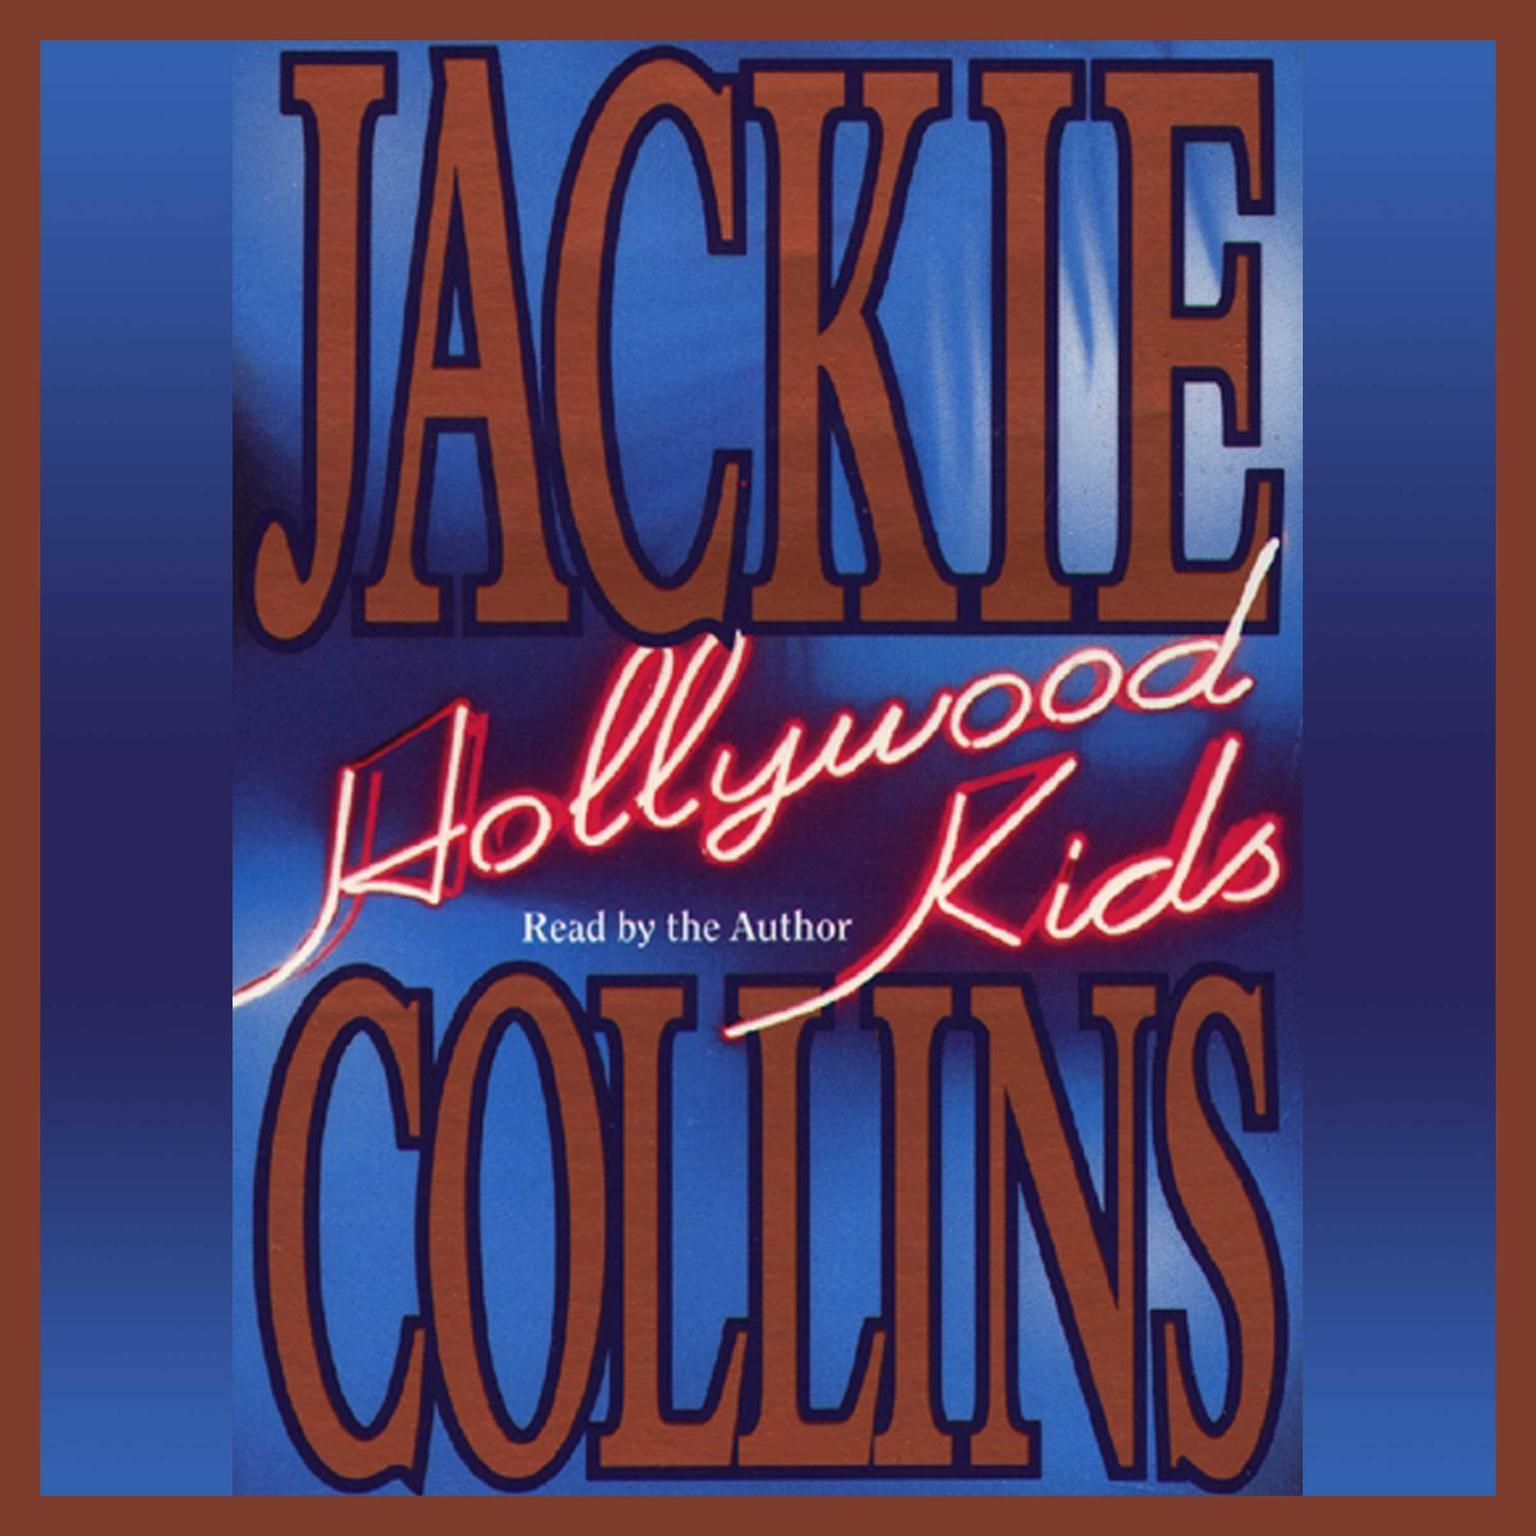 Hollywood Kids (Abridged) Audiobook, by Jackie Collins